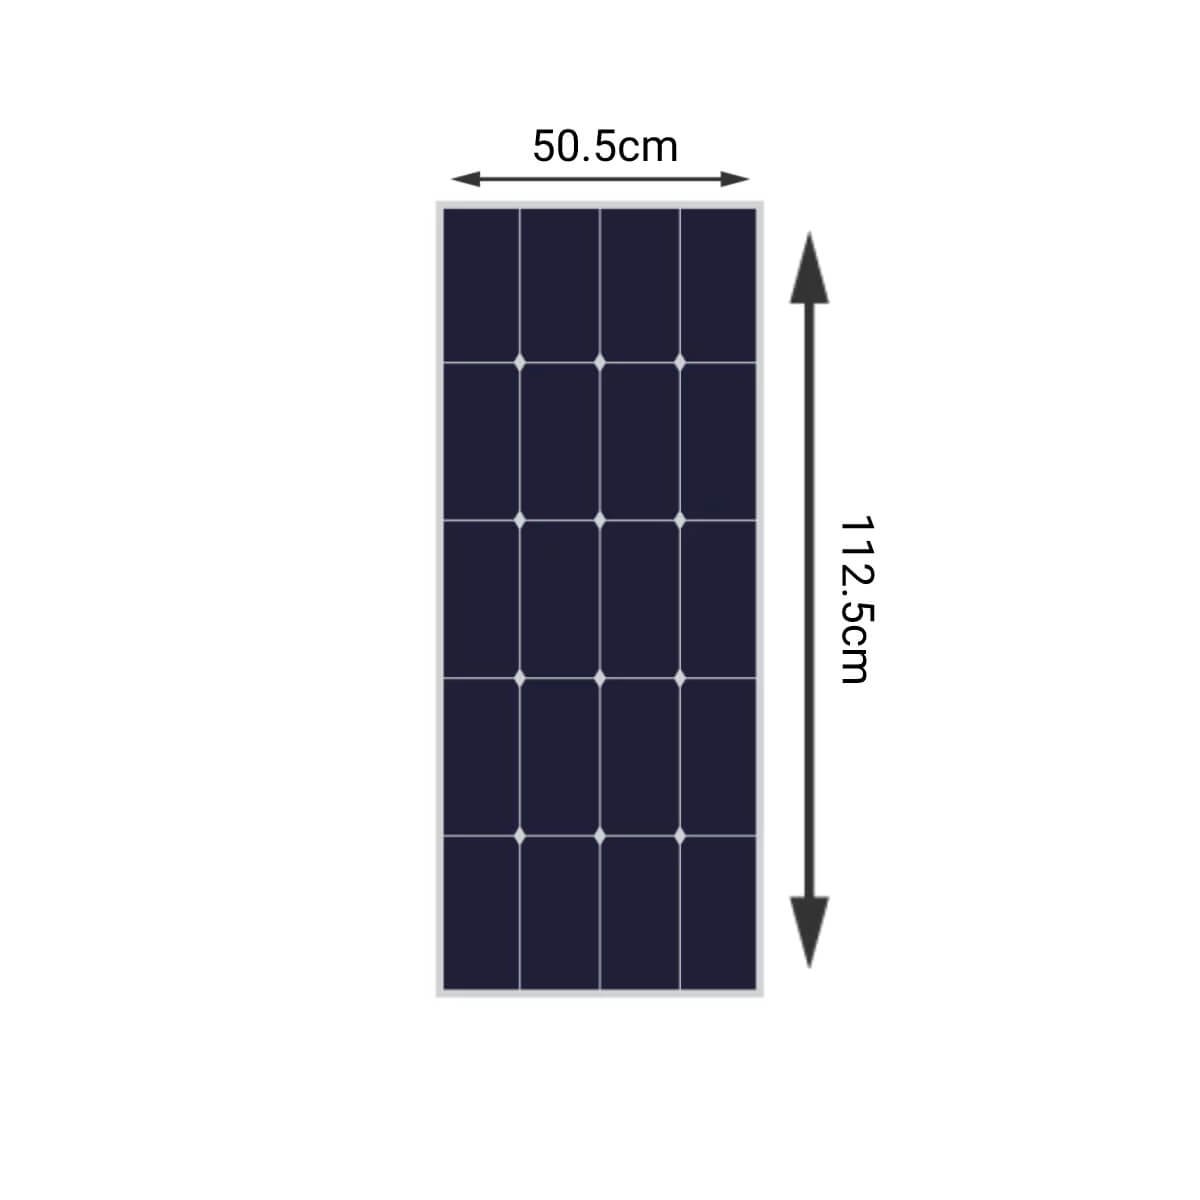 300W Flexible Solar Panel Kit – 3x 100W dimensions narrow